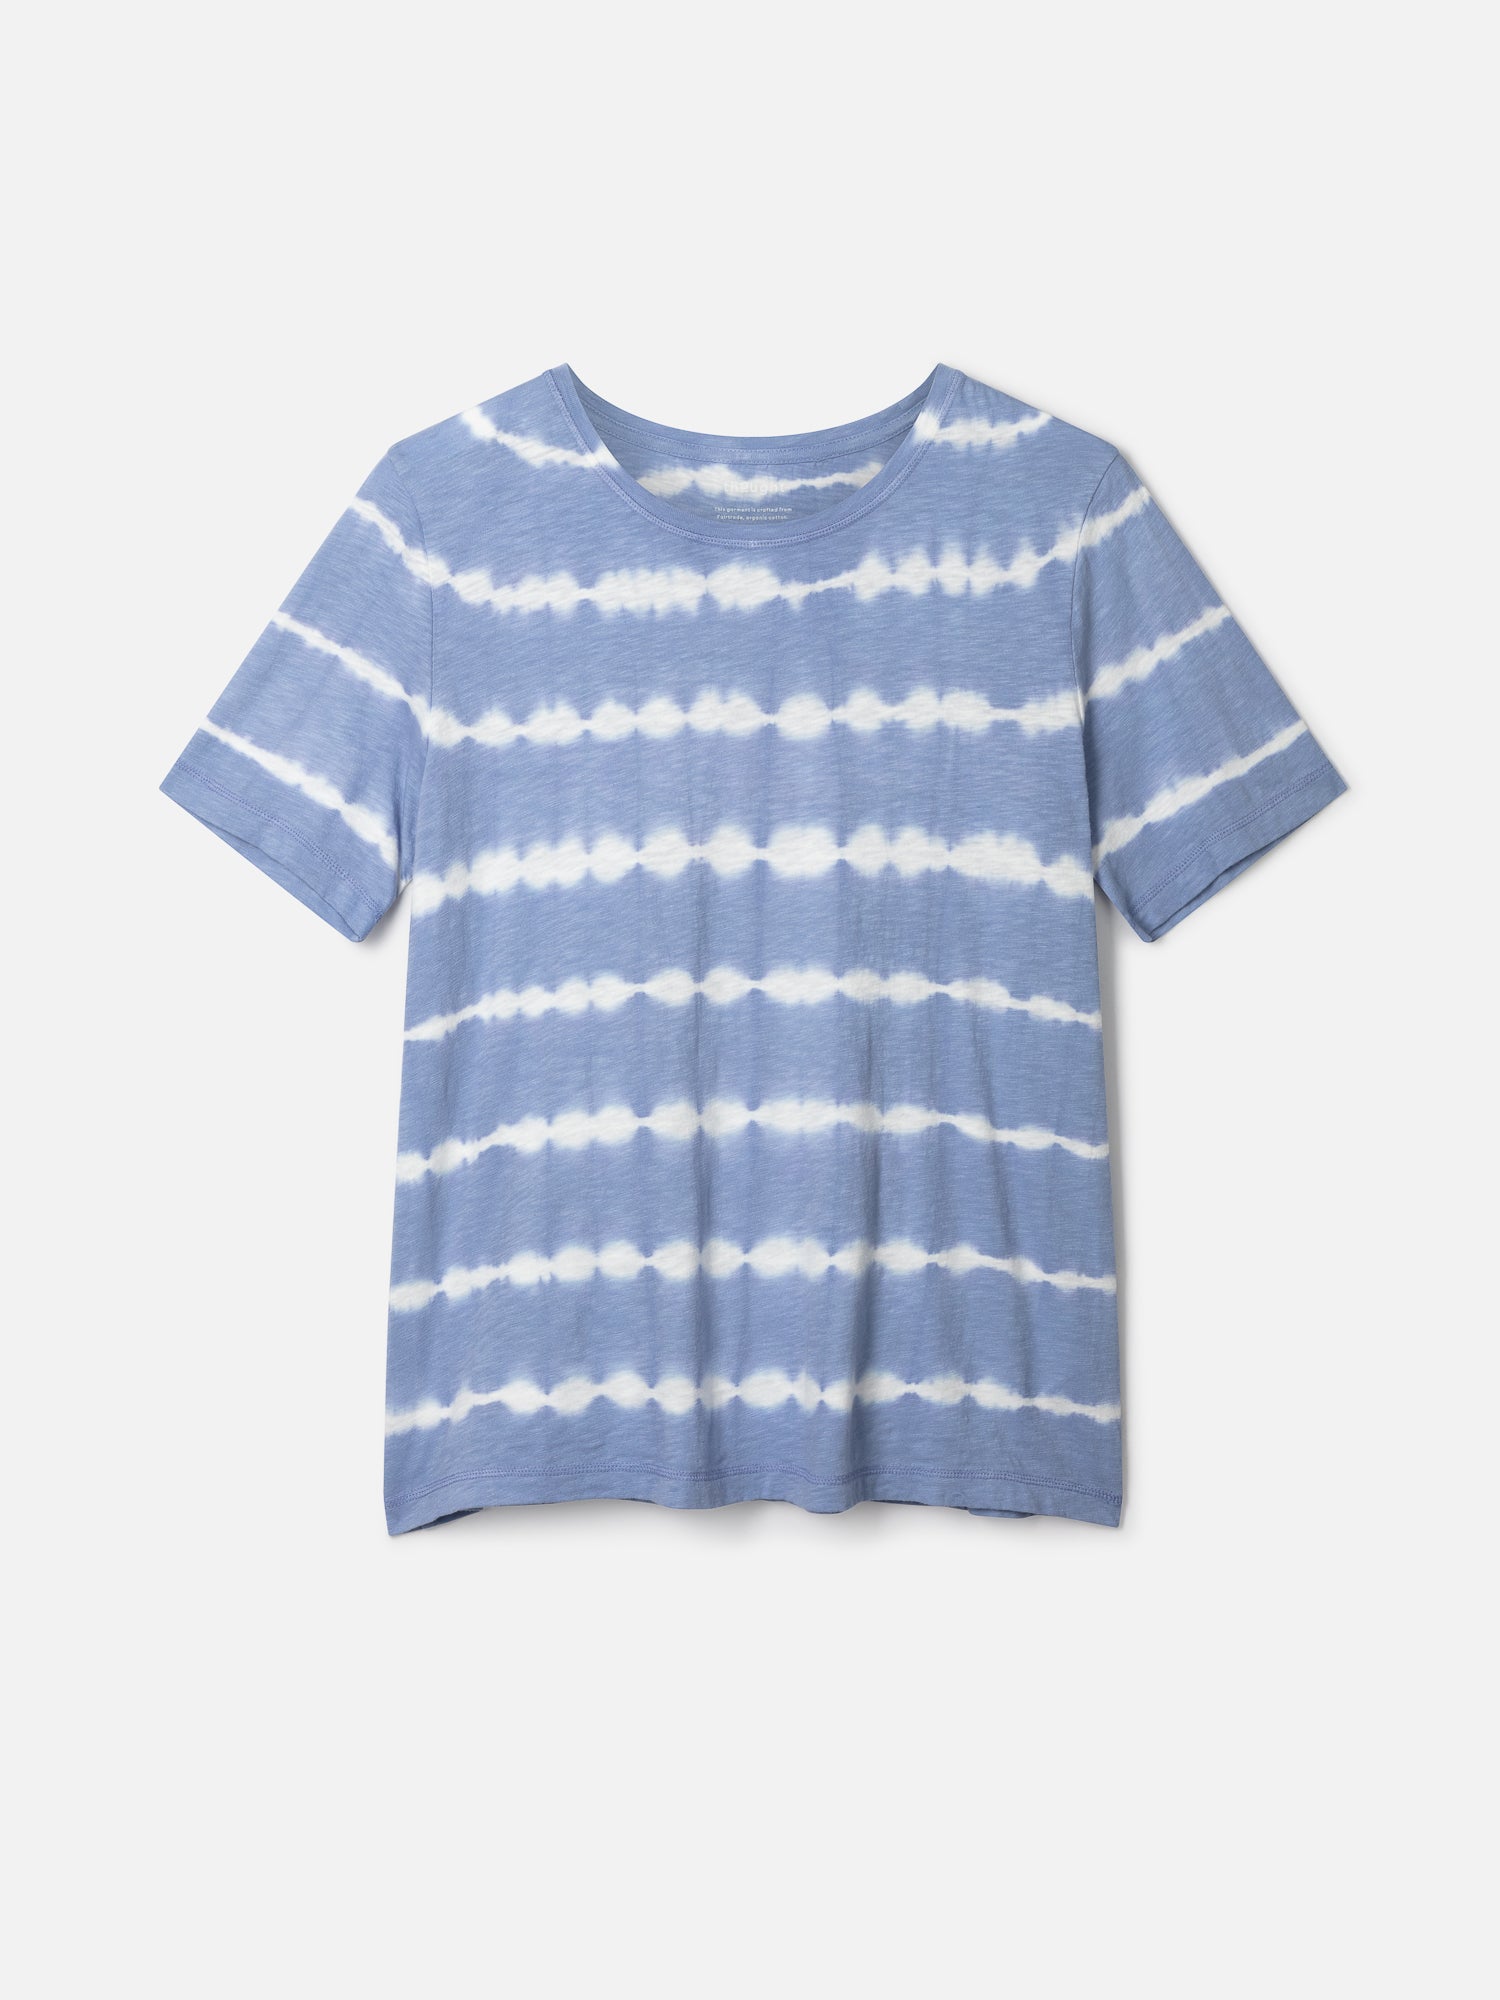 Fairtrade Organic Cotton Tie Dyed T-Shirt - Denim Blue